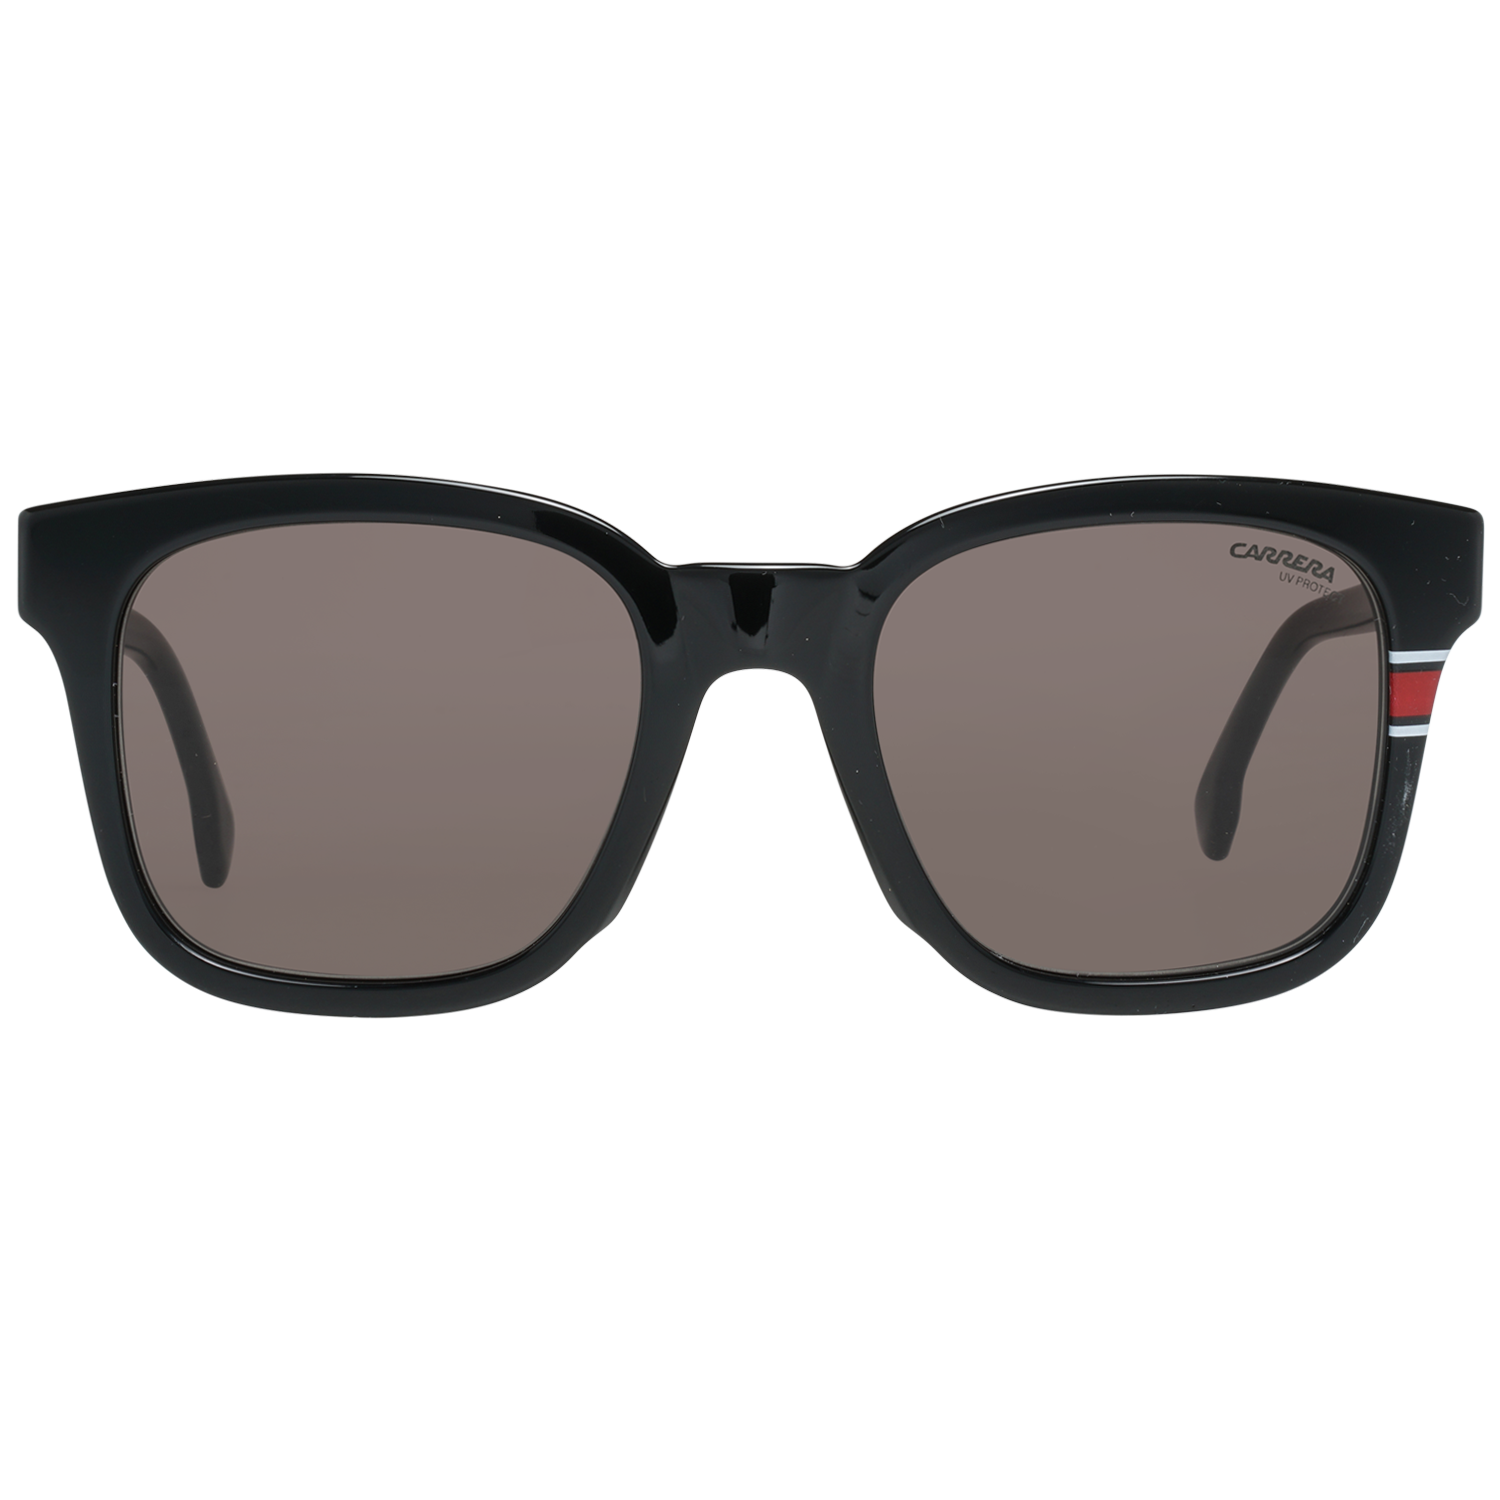 Carrera Sunglasses Carrera Sunglasses CA164/S 807 51mm Eyeglasses Eyewear UK USA Australia 